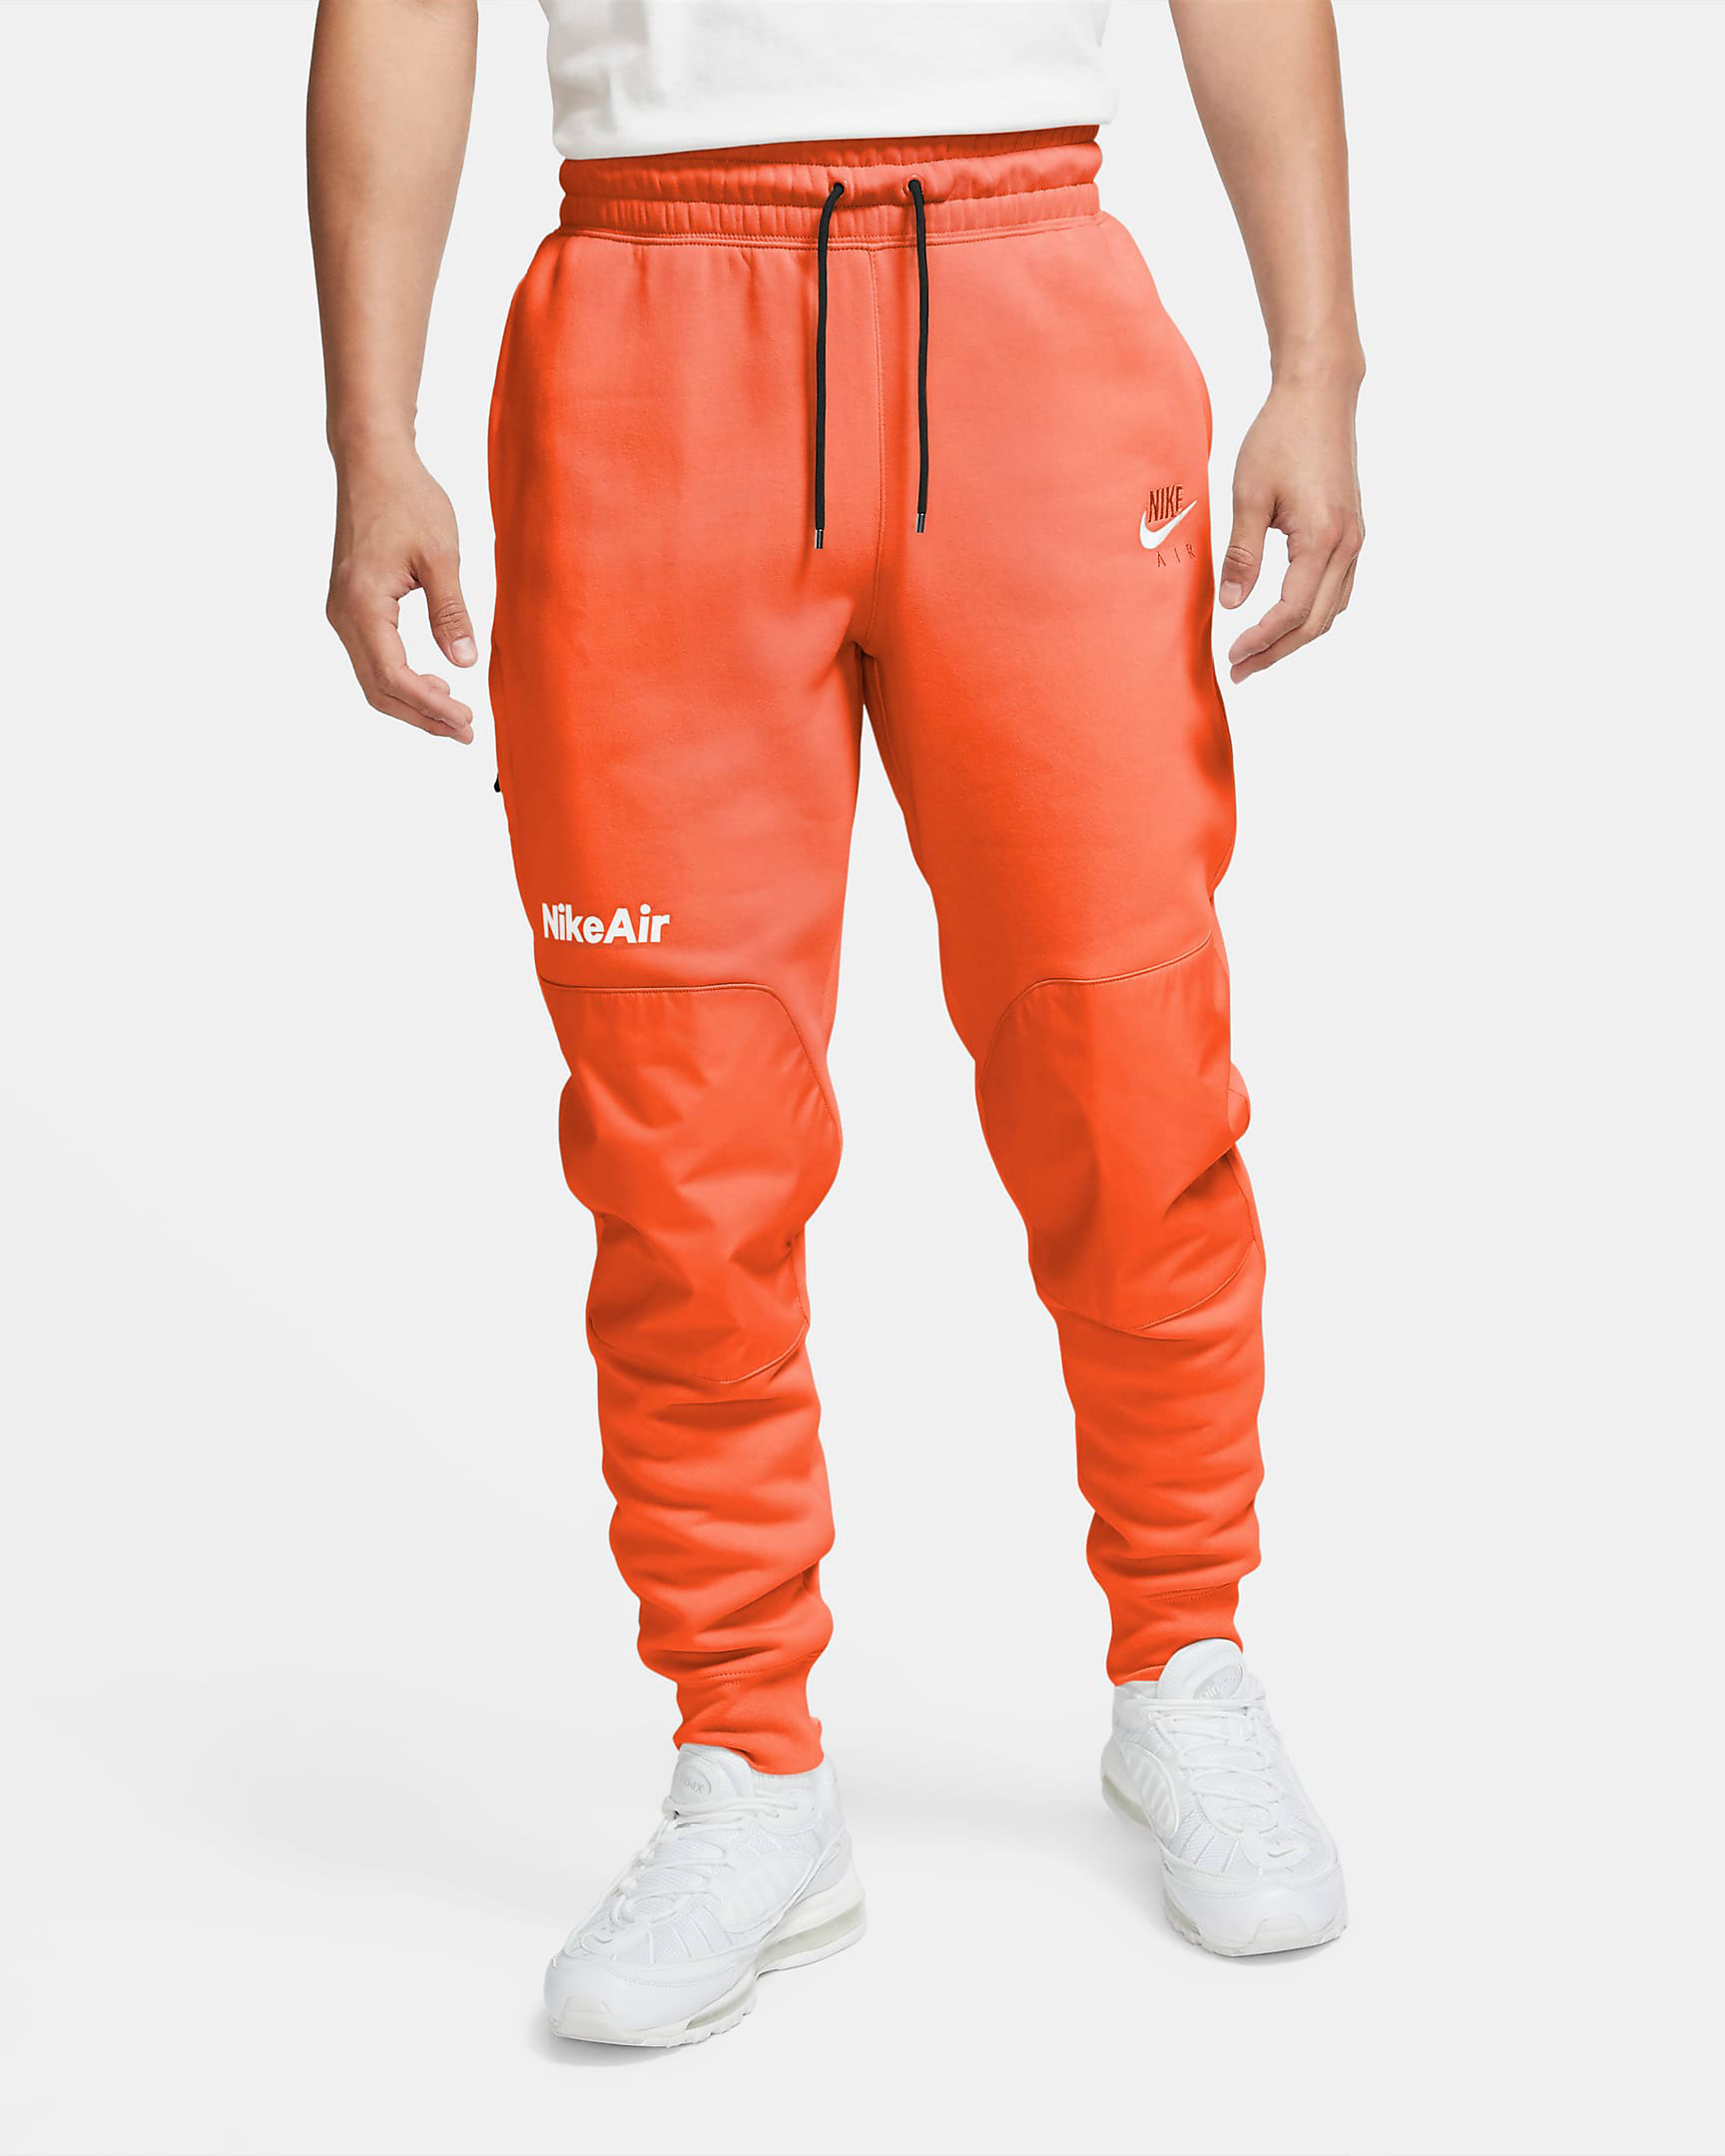 nike-air-fleece-pants-electro-orange